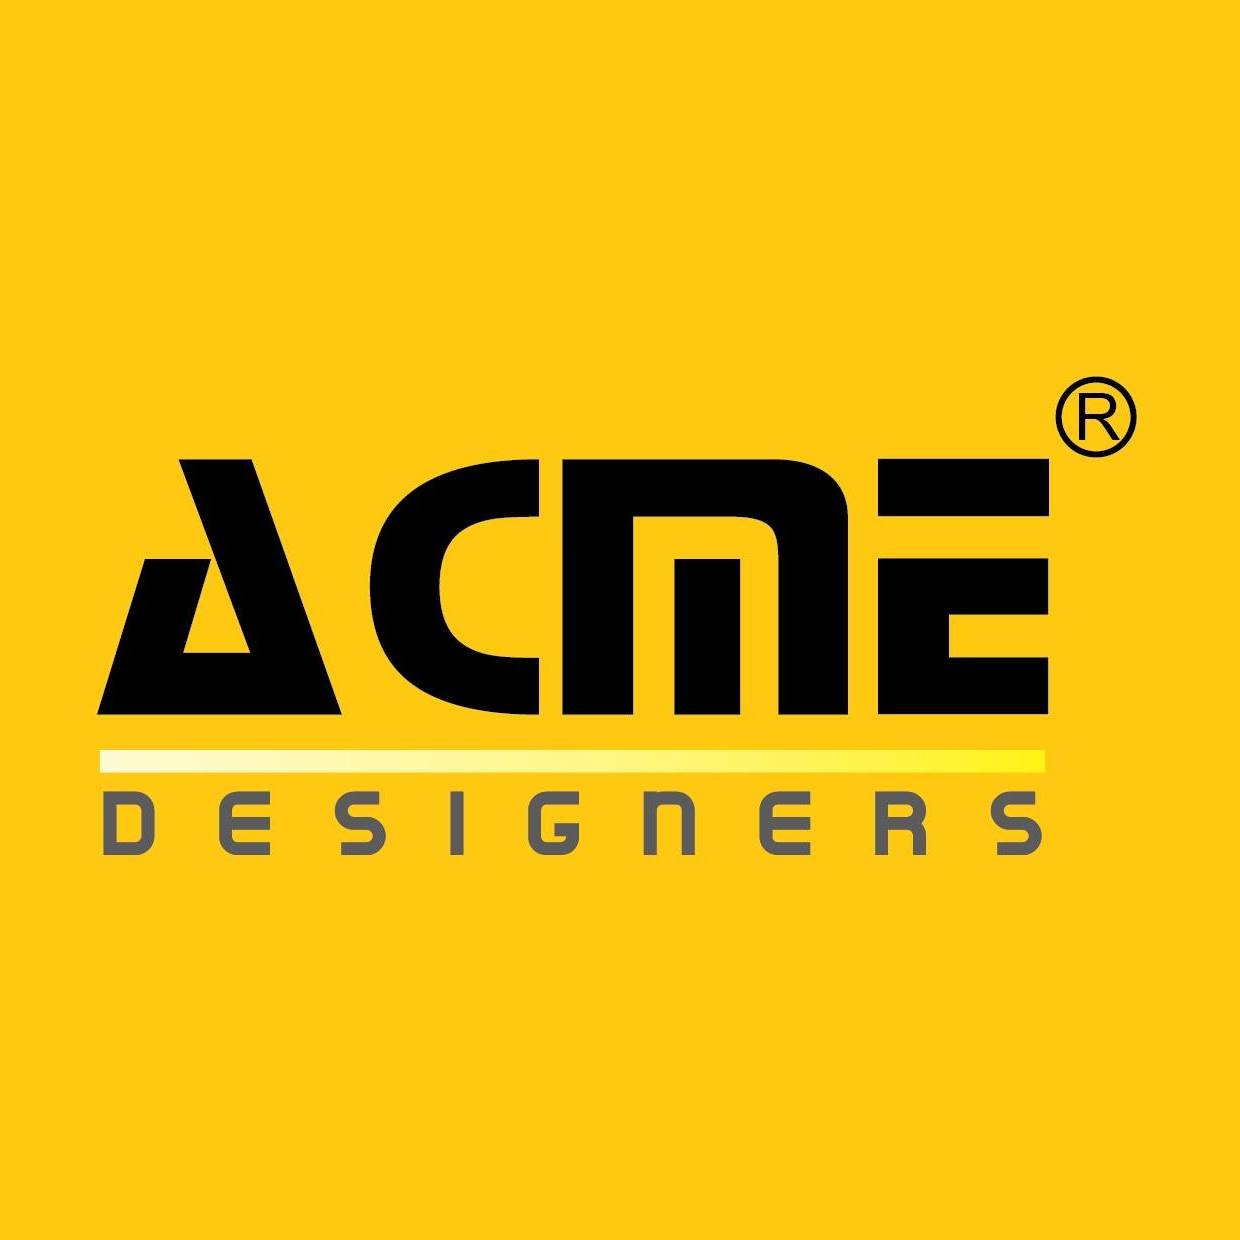 Acme Designers|Architect|Professional Services